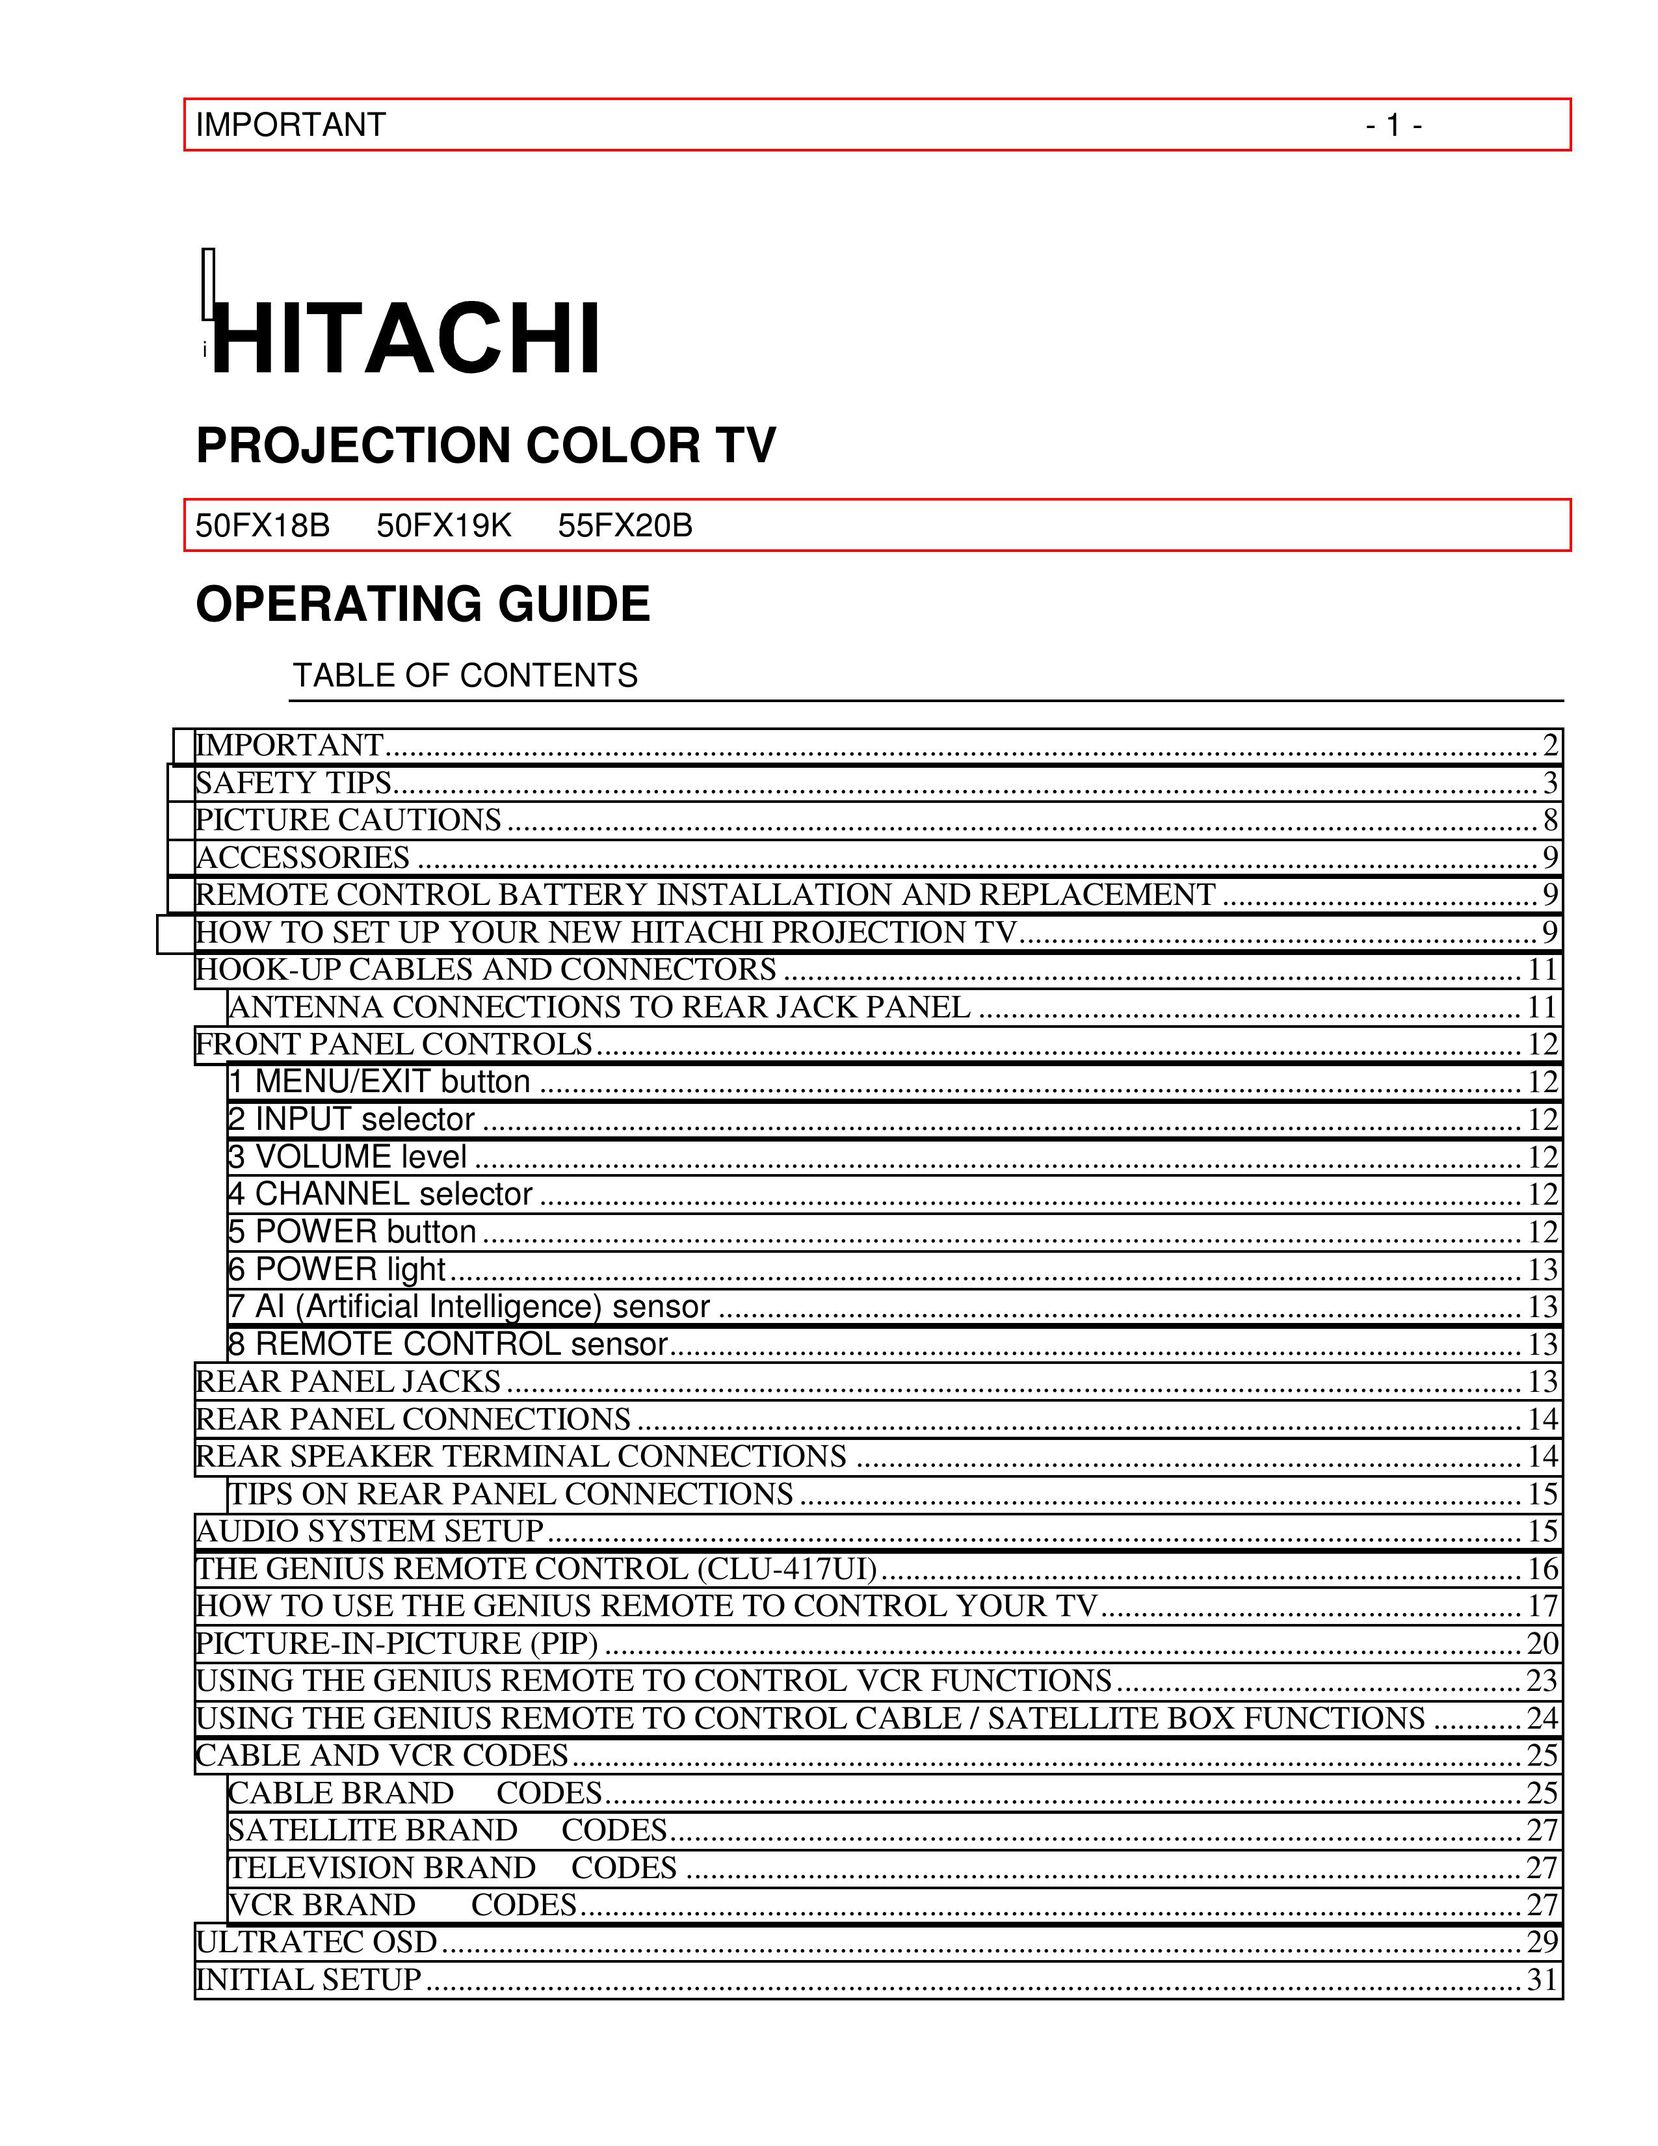 Hitachi 50FX18B CRT Television User Manual